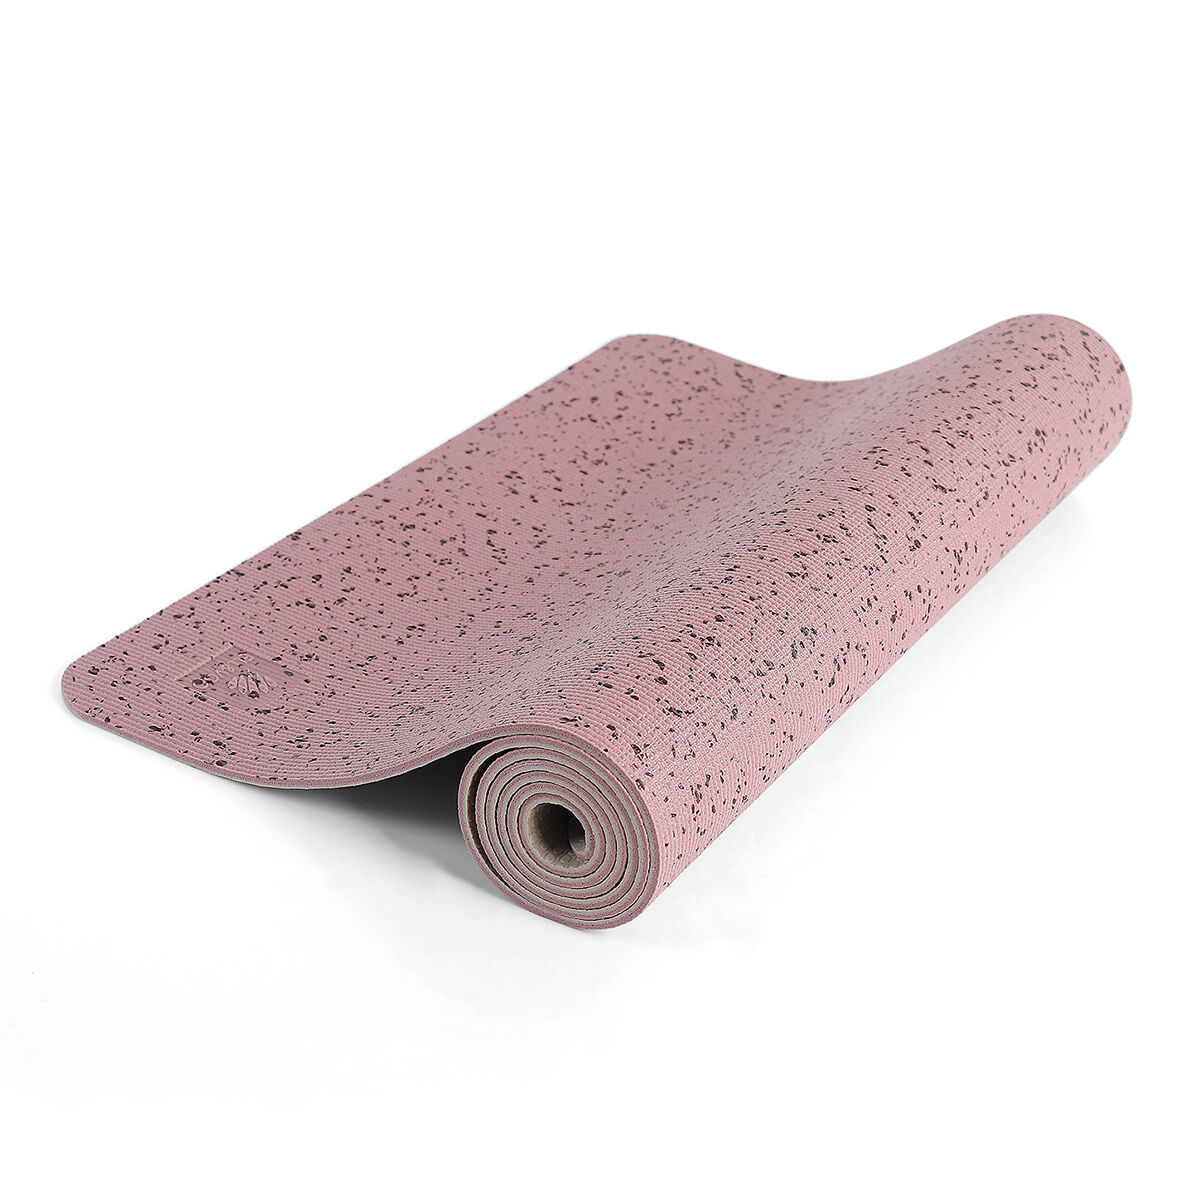 Gaiam Dry-Grip Yoga Mat - 5mm Thick Non-Slip Portugal